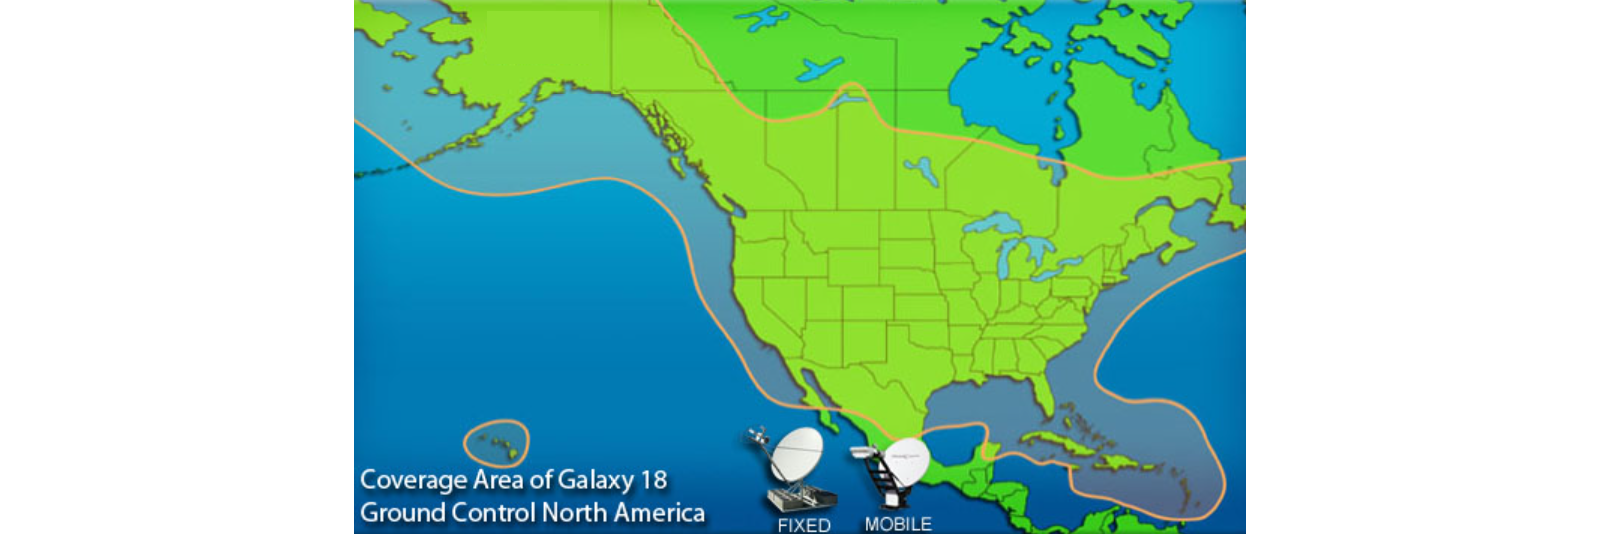 Coverage-Area-of-Galaxy-18-Satellite